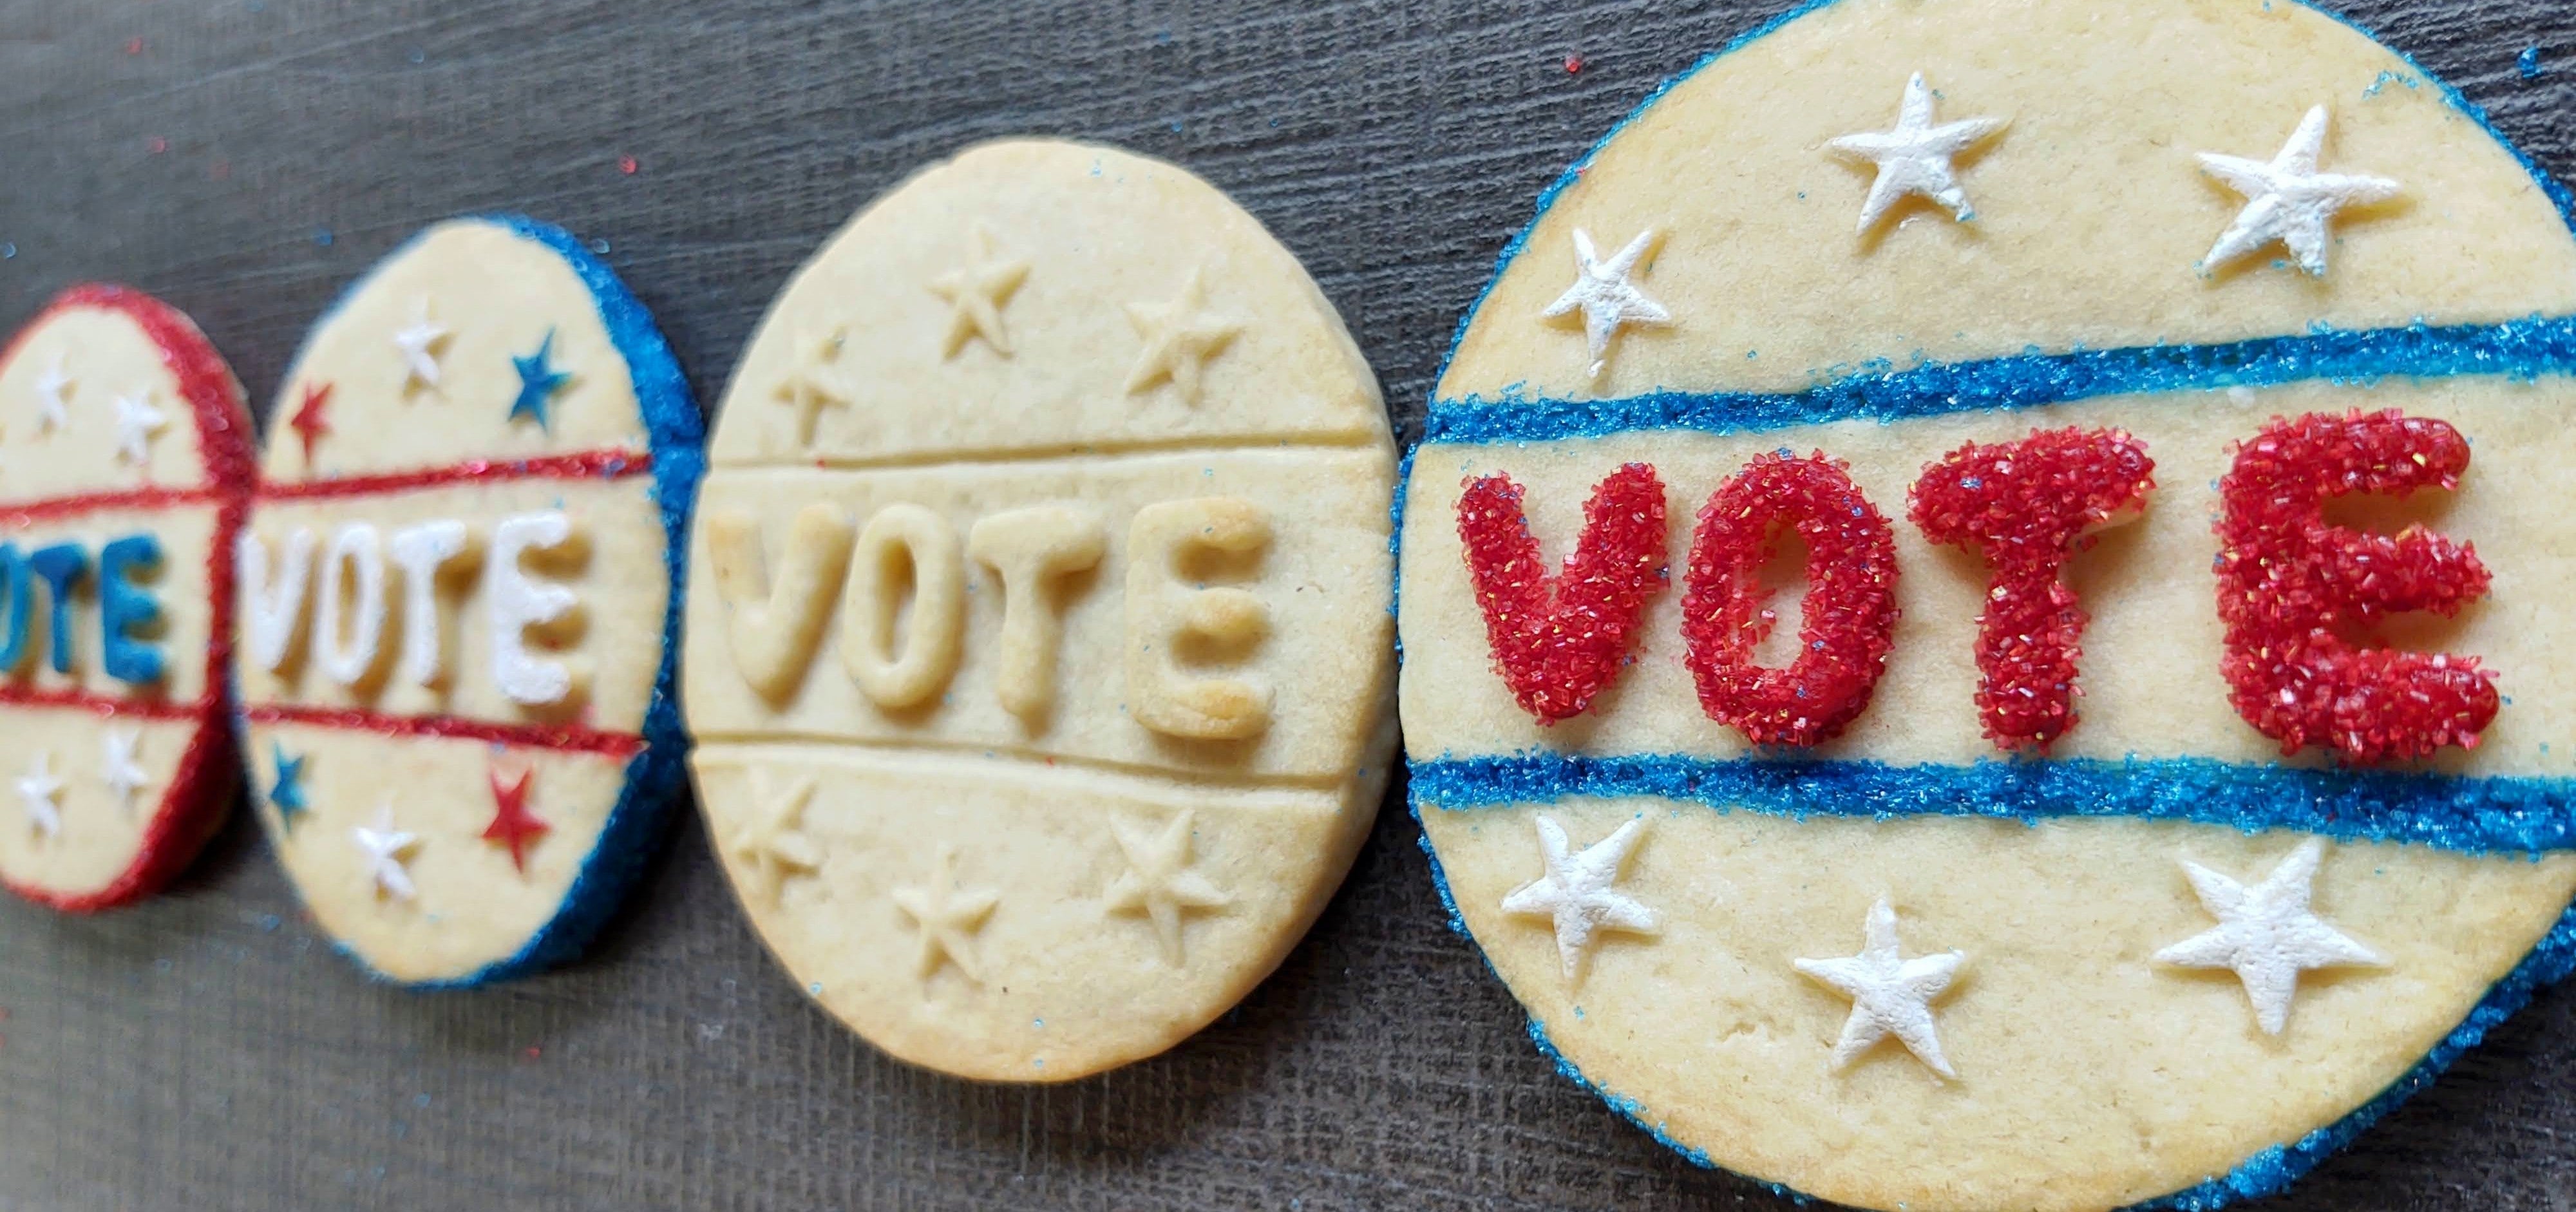 Vote Silicone Cookie Mold